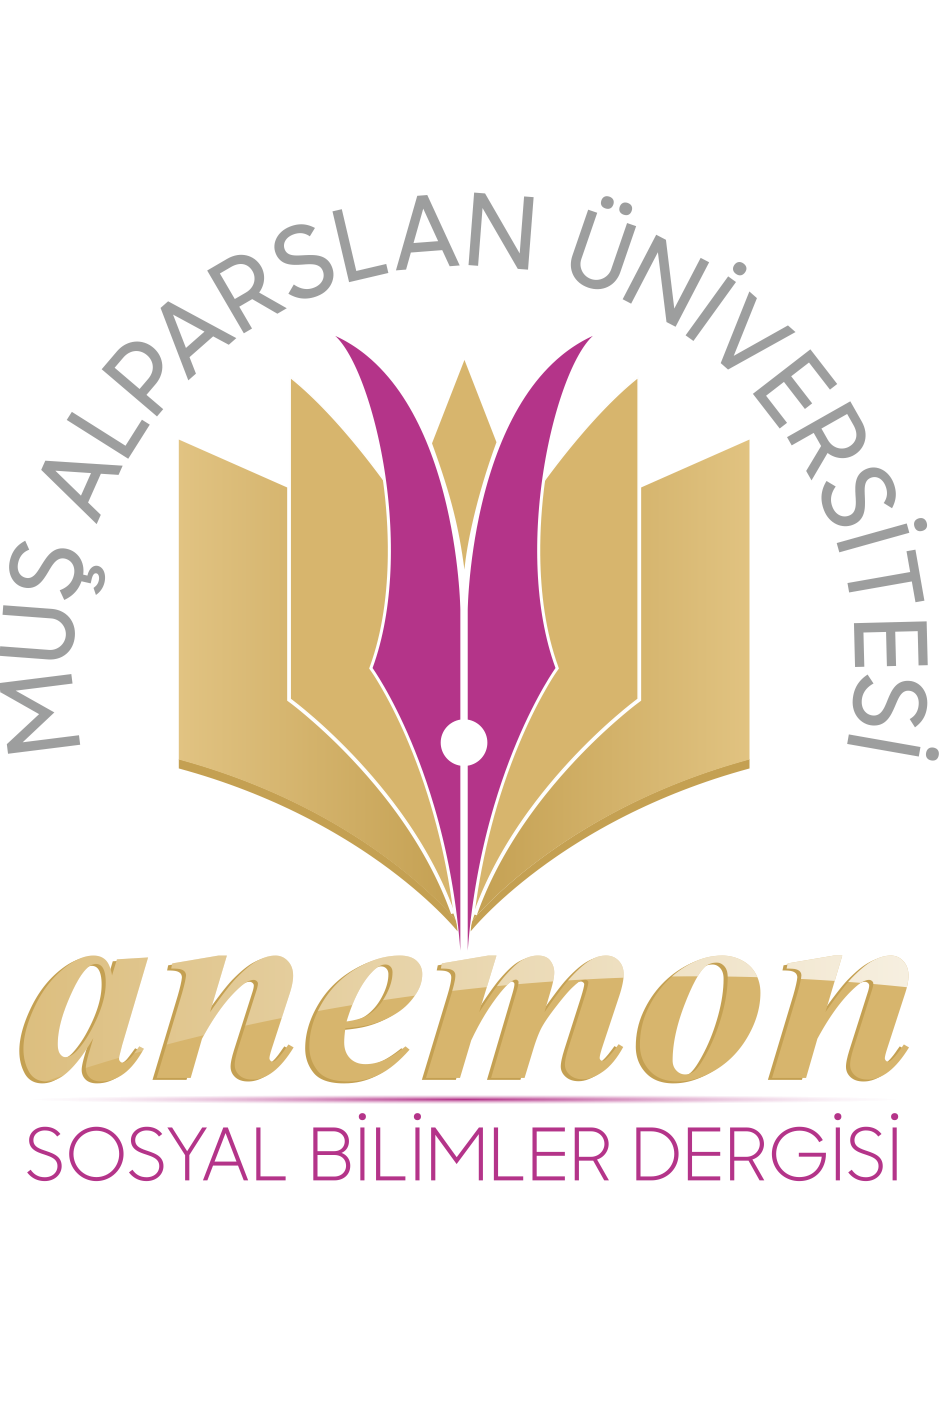 Journal of Social Sciences of Mus Alparslan University